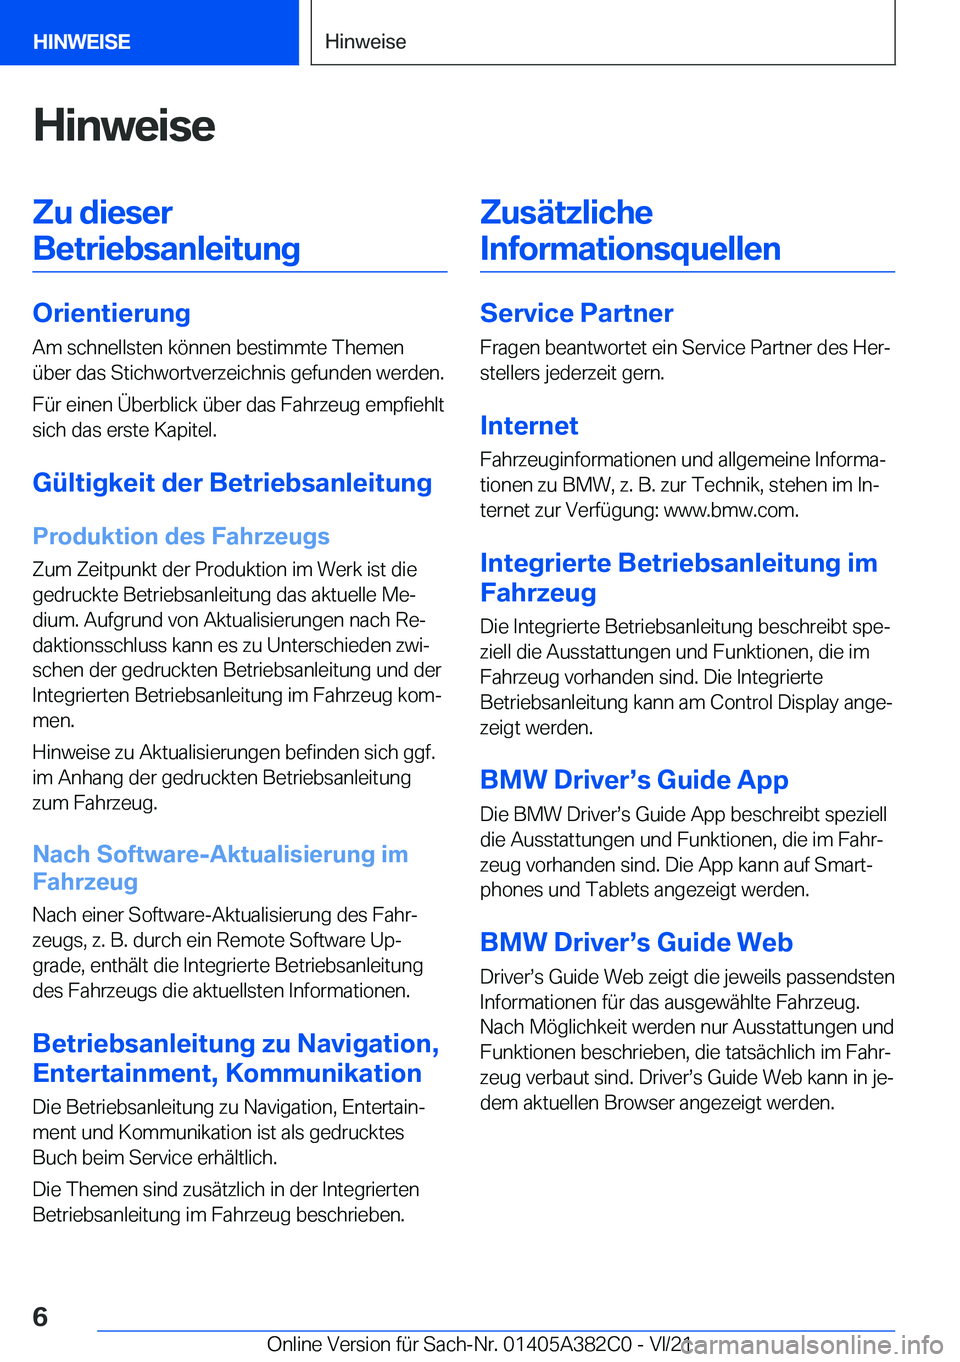 BMW Z4 2022  Betriebsanleitungen (in German) �H�i�n�w�e�i�s�e�Z�u��d�i�e�s�e�r�B�e�t�r�i�e�b�s�a�n�l�e�i�t�u�n�g
�O�r�i�e�n�t�i�e�r�u�n�g �A�m��s�c�h�n�e�l�l�s�t�e�n��k�